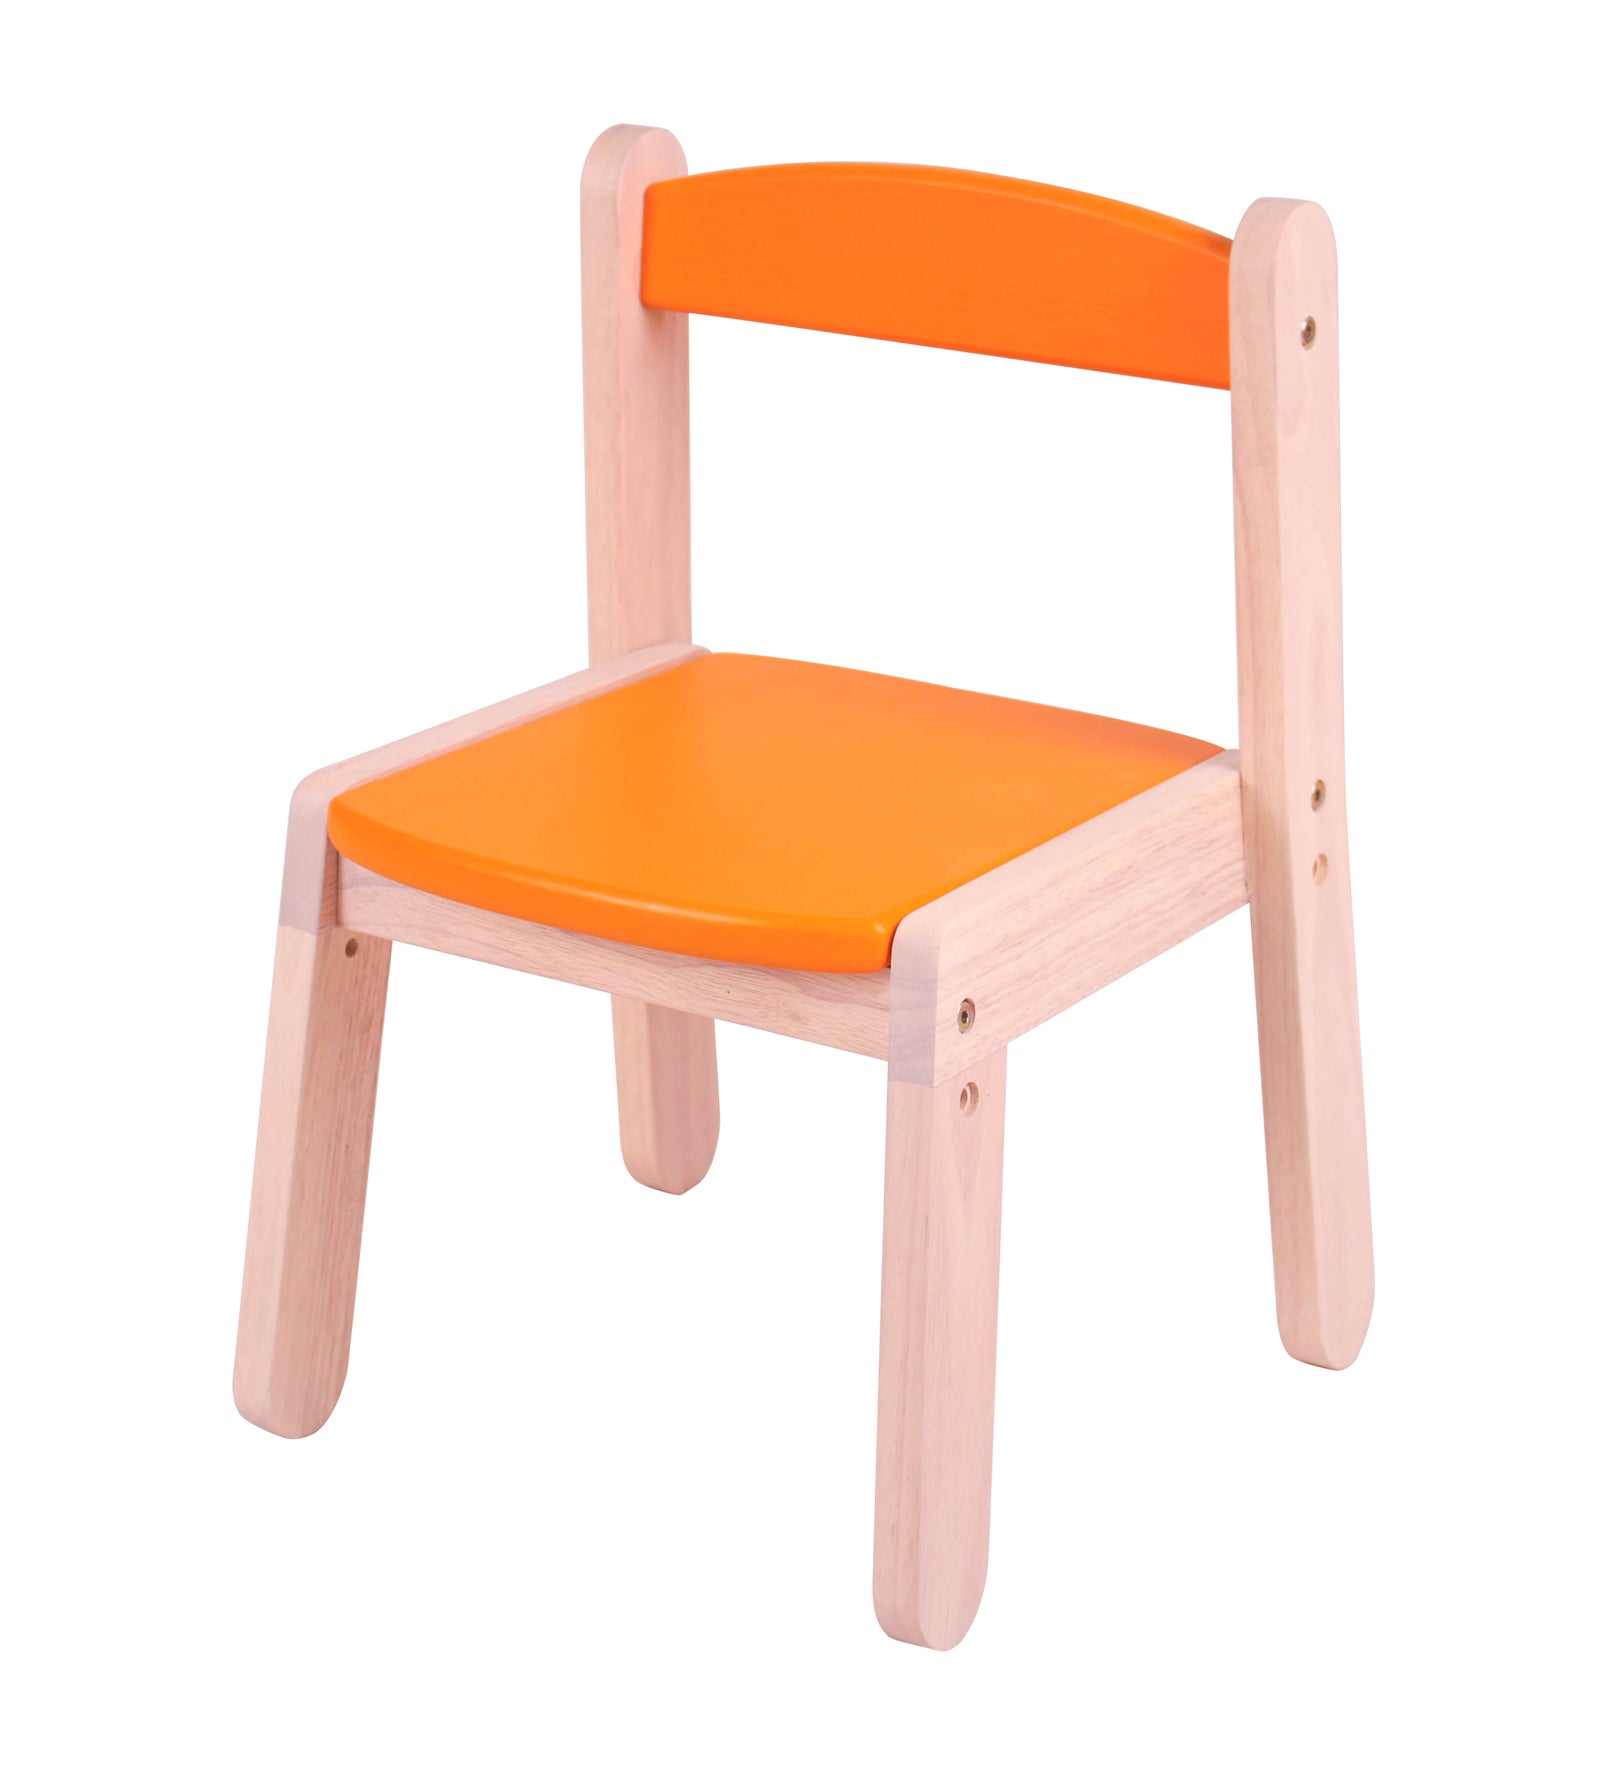 orange kids chair for home school